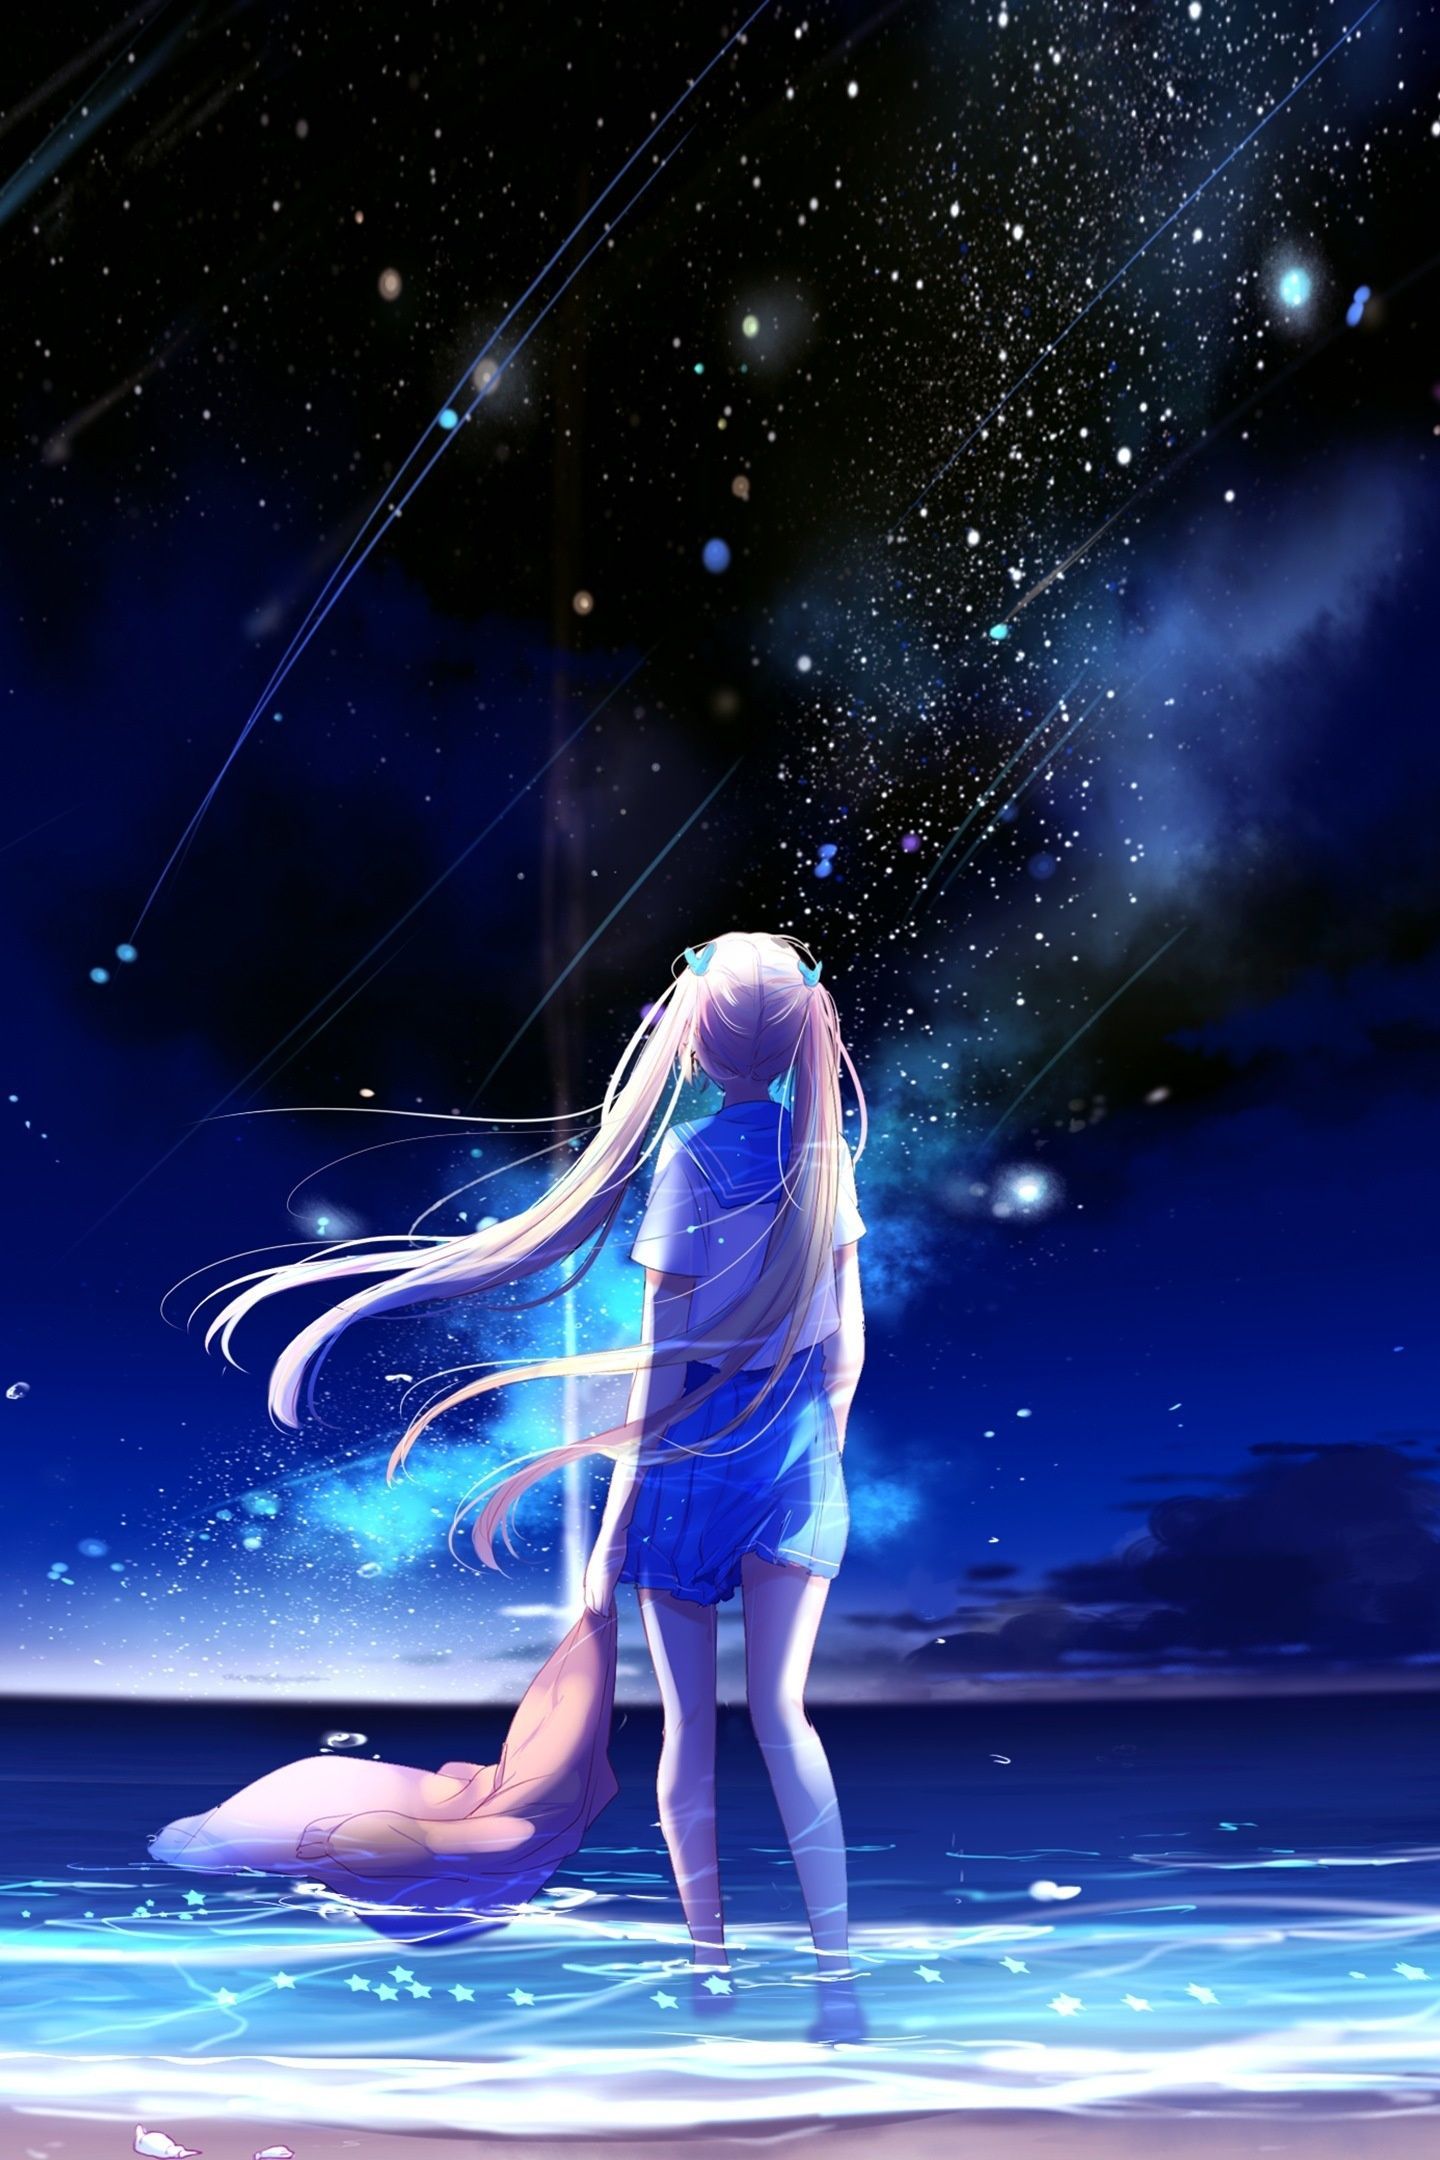 Hình nền Anime Galaxy - Lụm đc trên google - Nhớ follow mk nha - Thank you  😗 | Anime wallpaper, Anime scenery, Anime wallpaper iphone